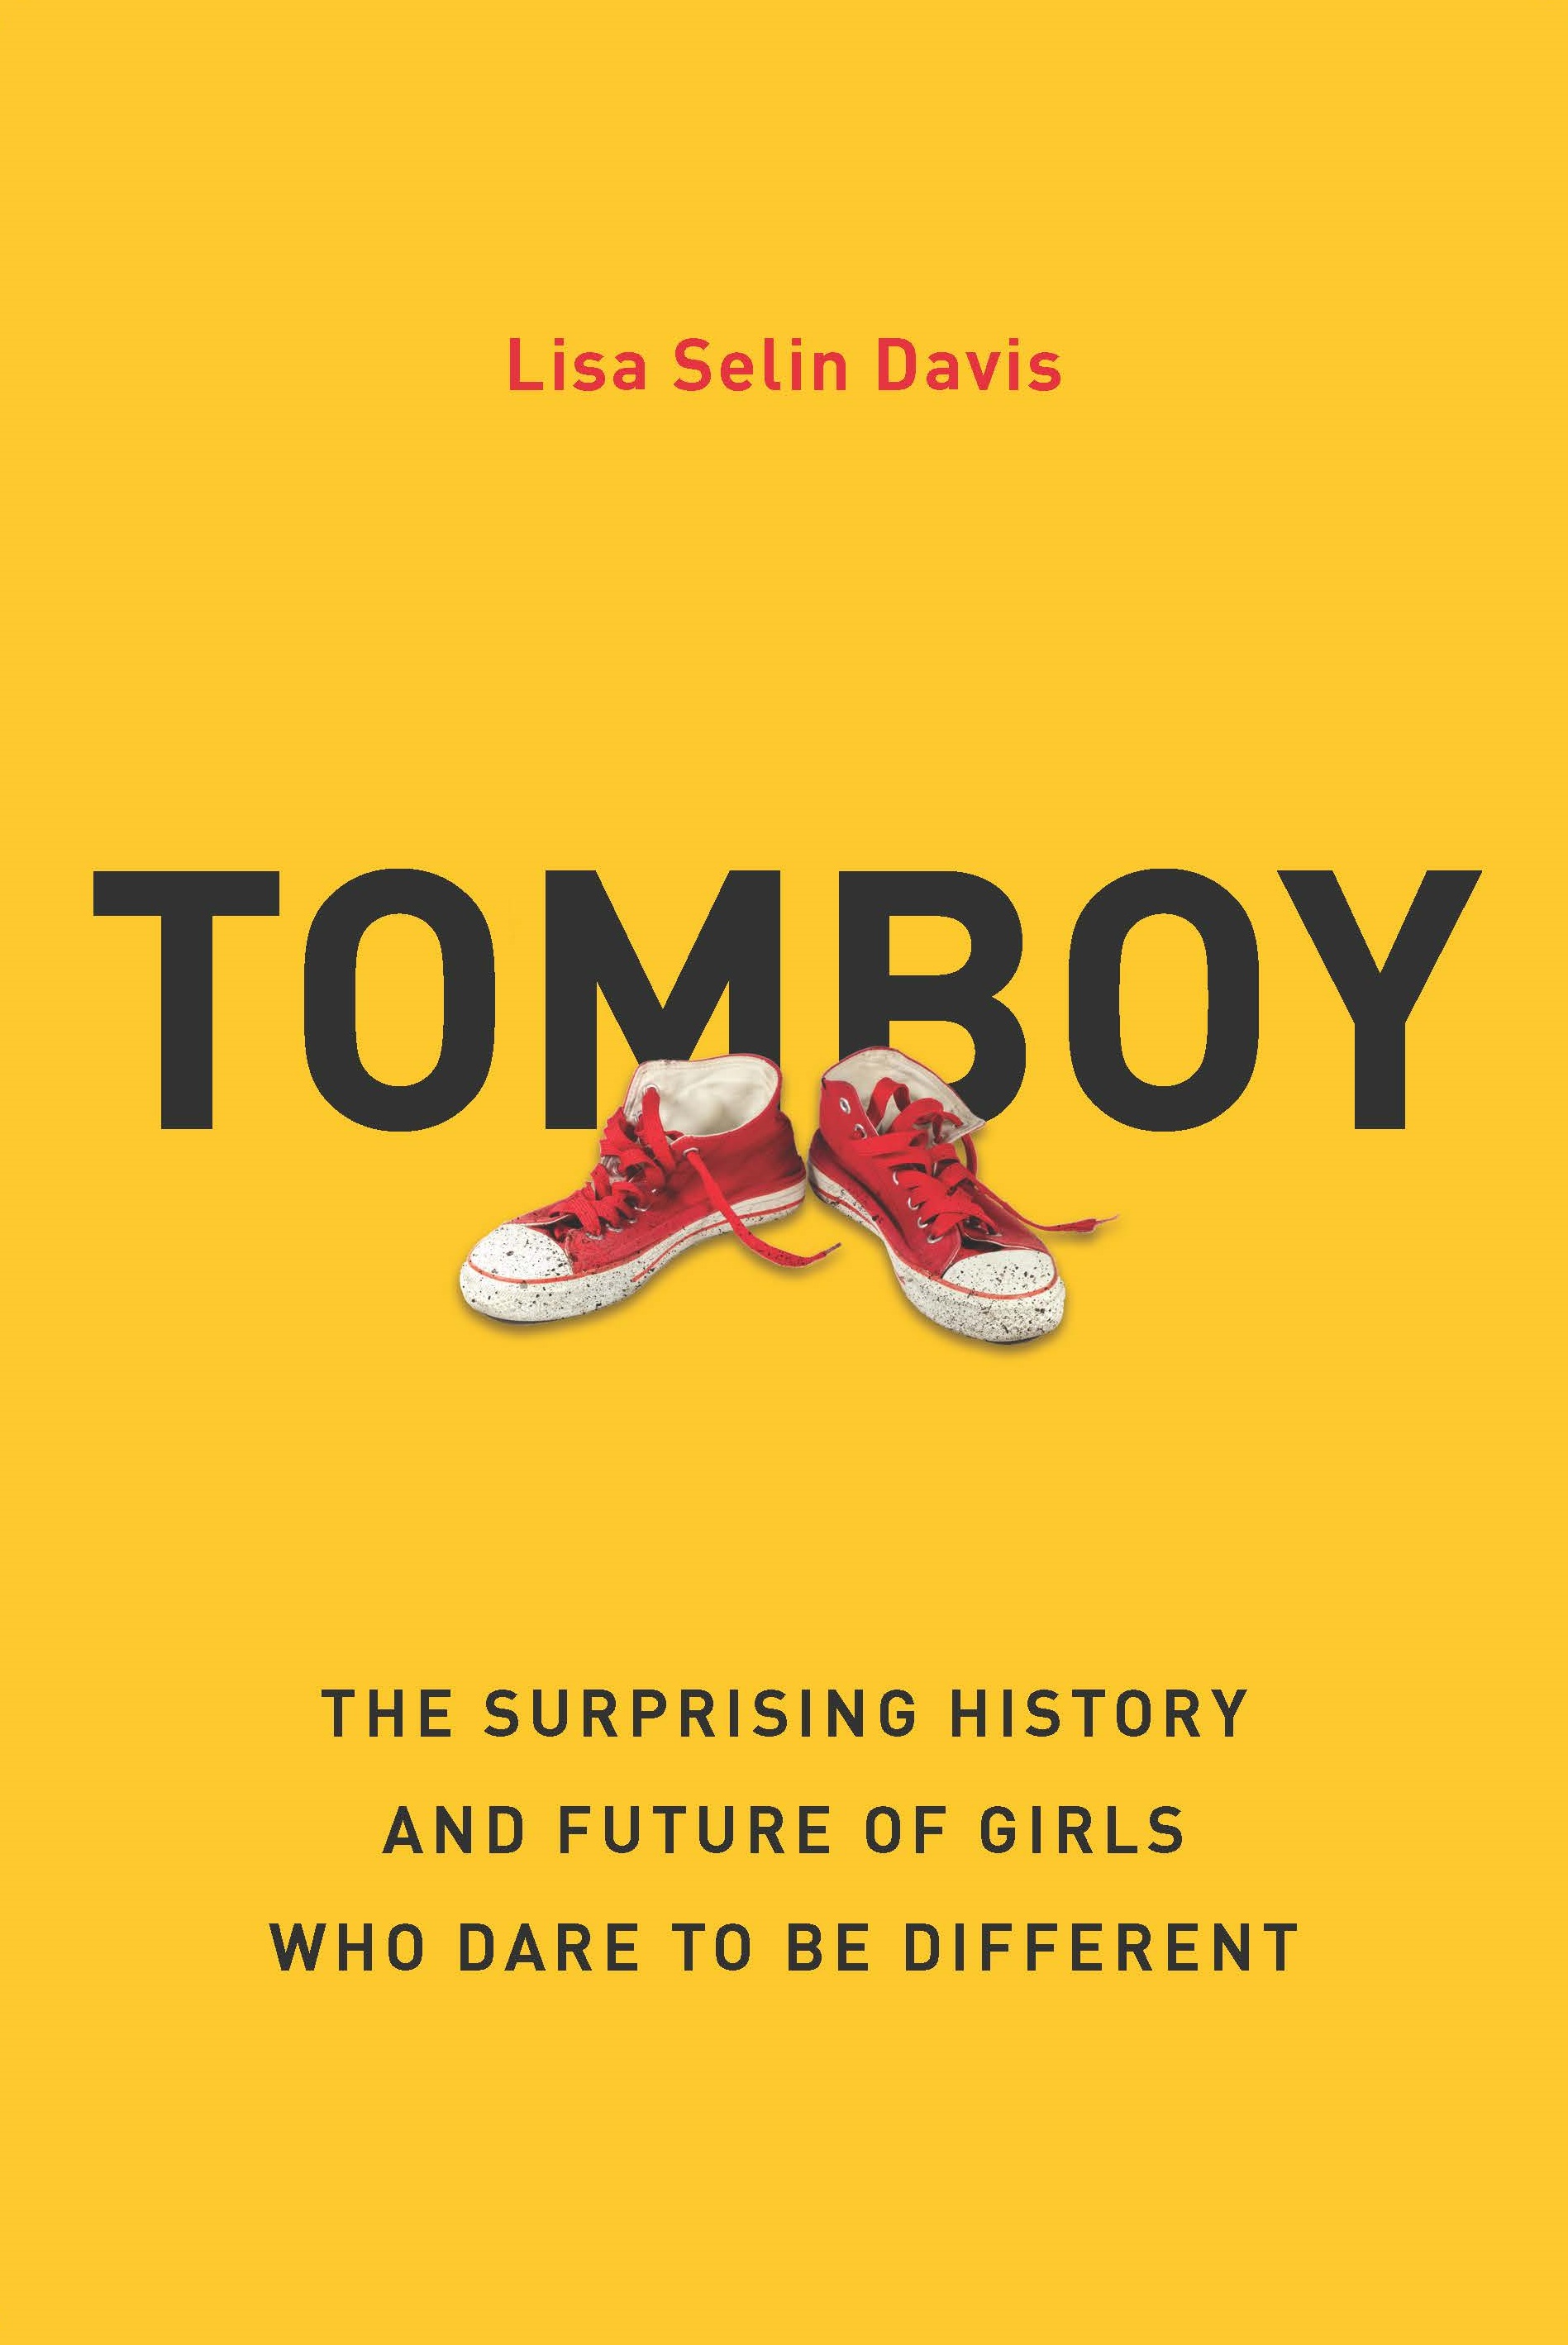 Virtual Book Launch: Tomboy by Lisa Selin Davis in conversation with Lauren Sandler